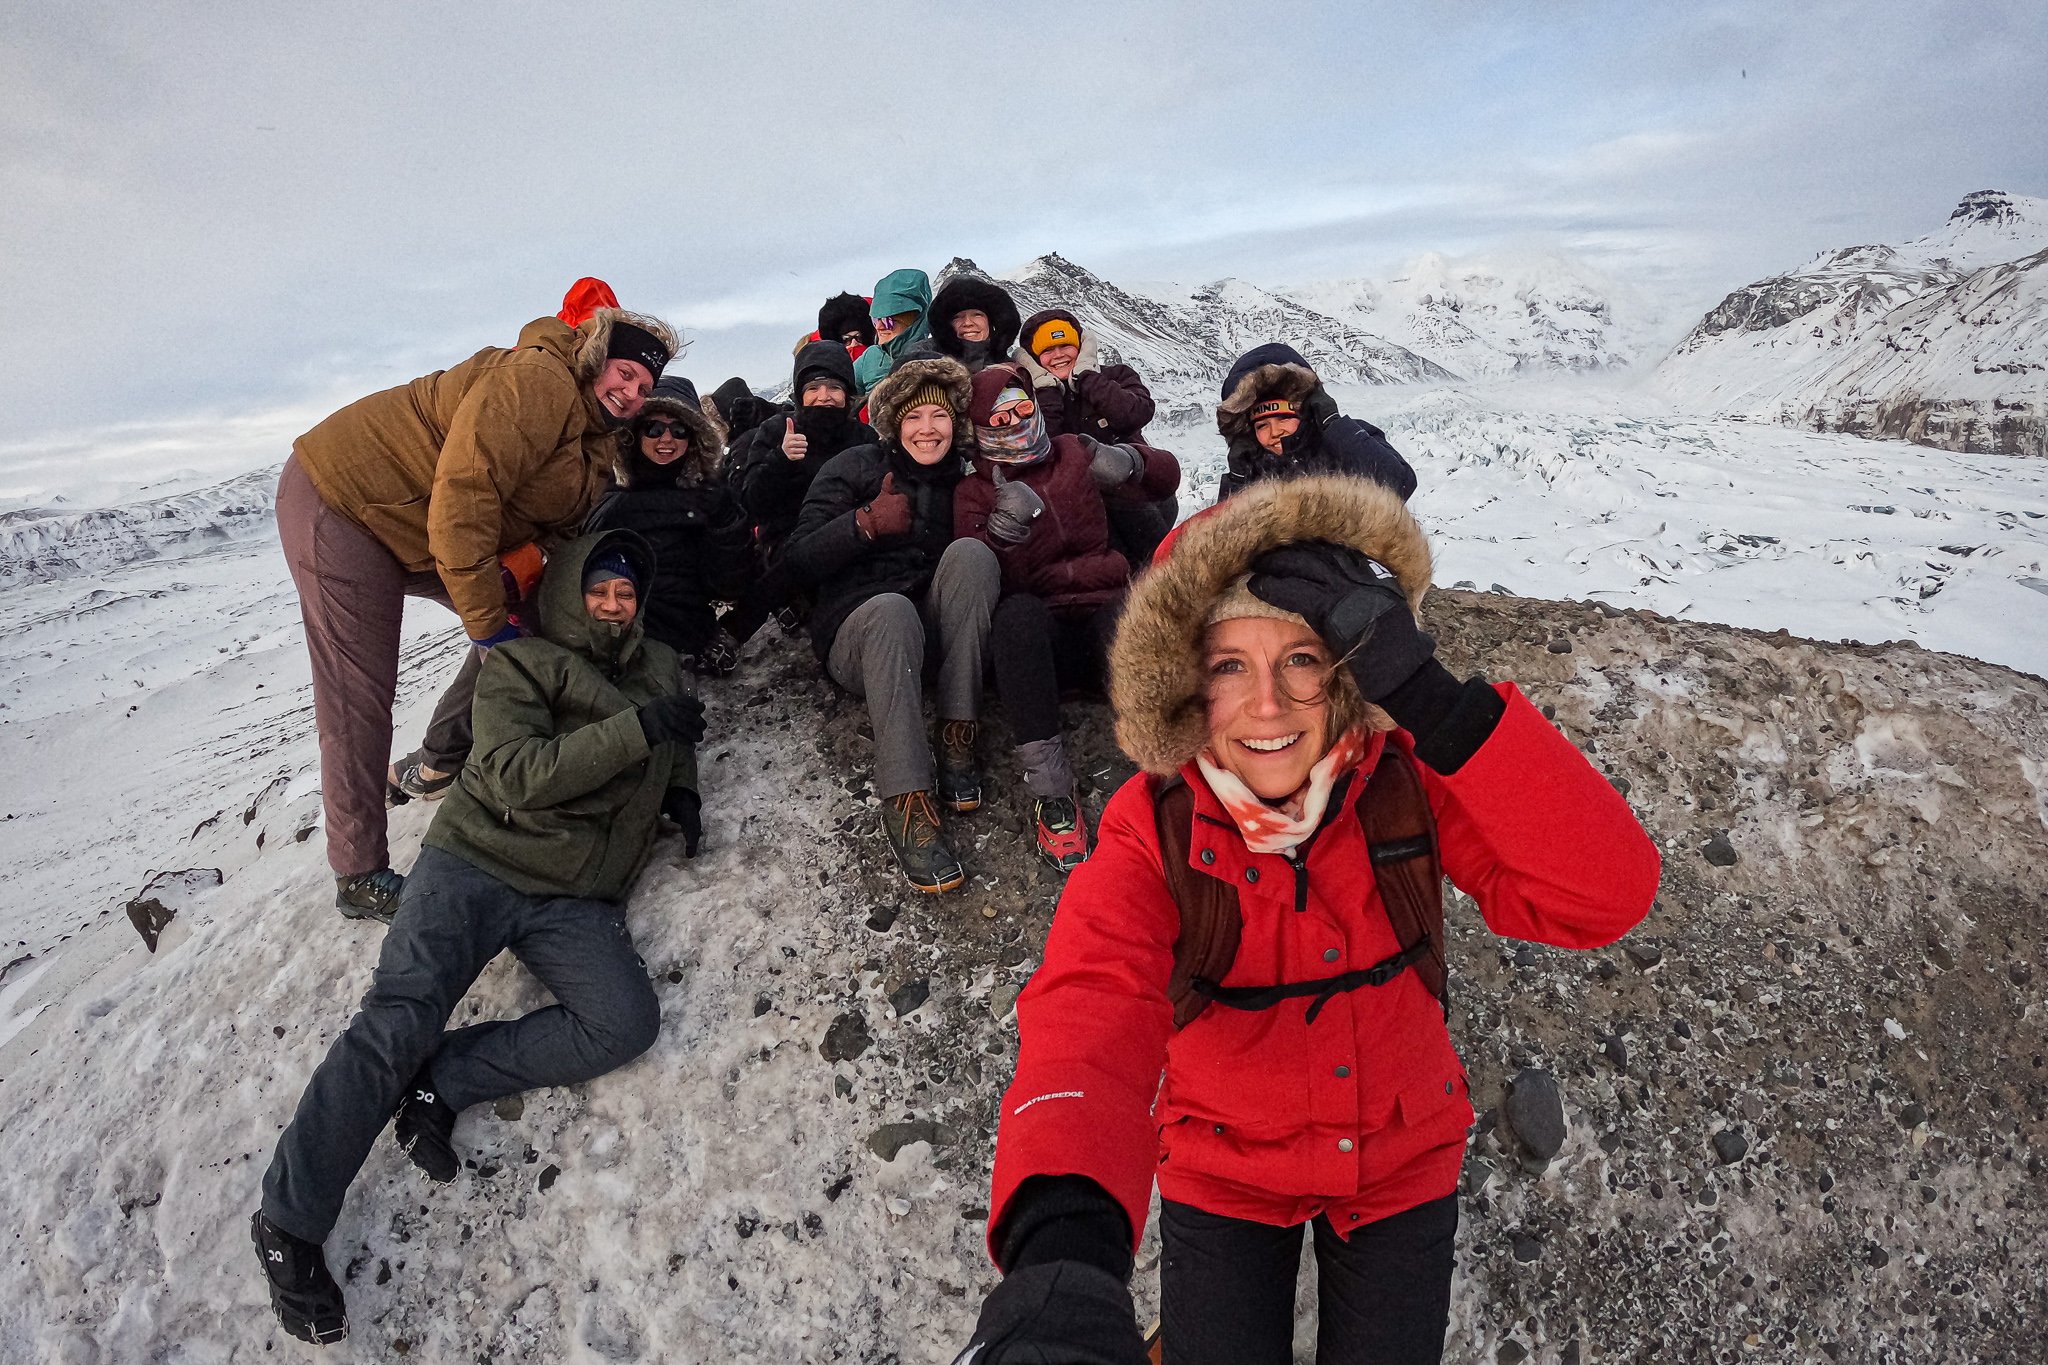 TrovaTrip-Iceland-Travelers-Posing-In-Snow-1